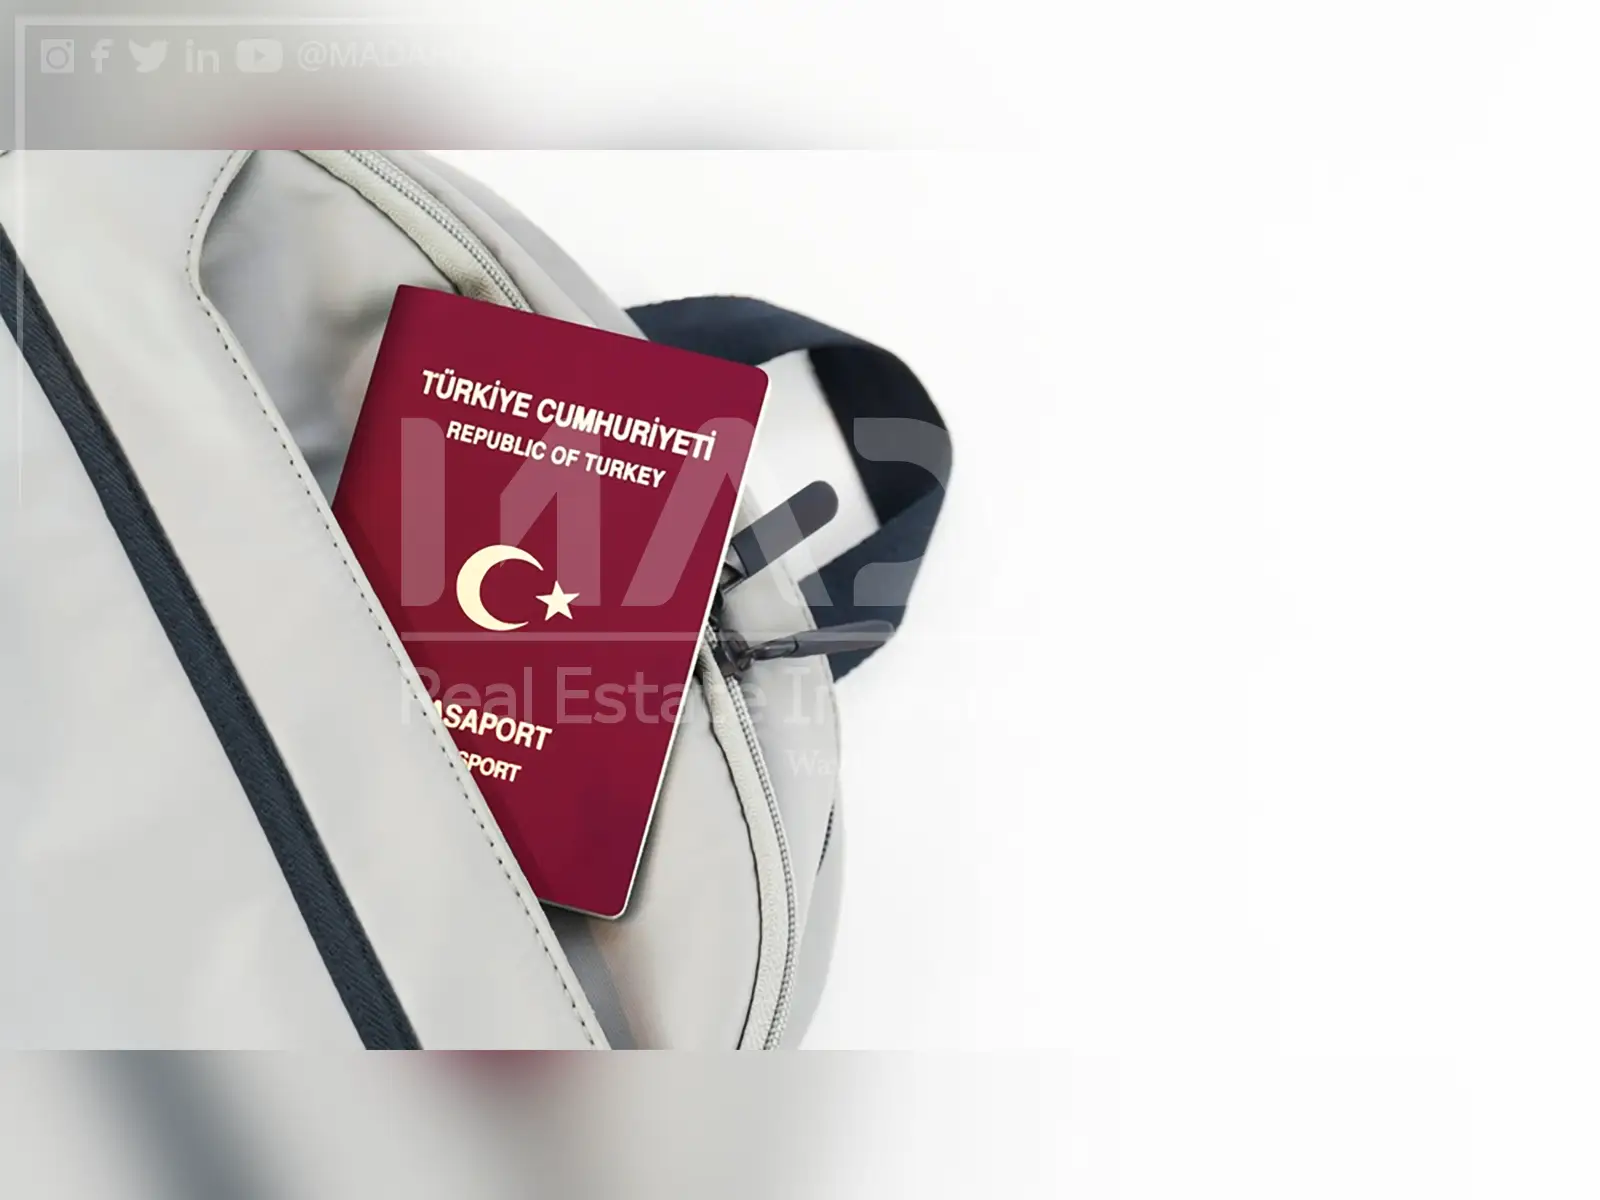 How to obtain a Turkish passport